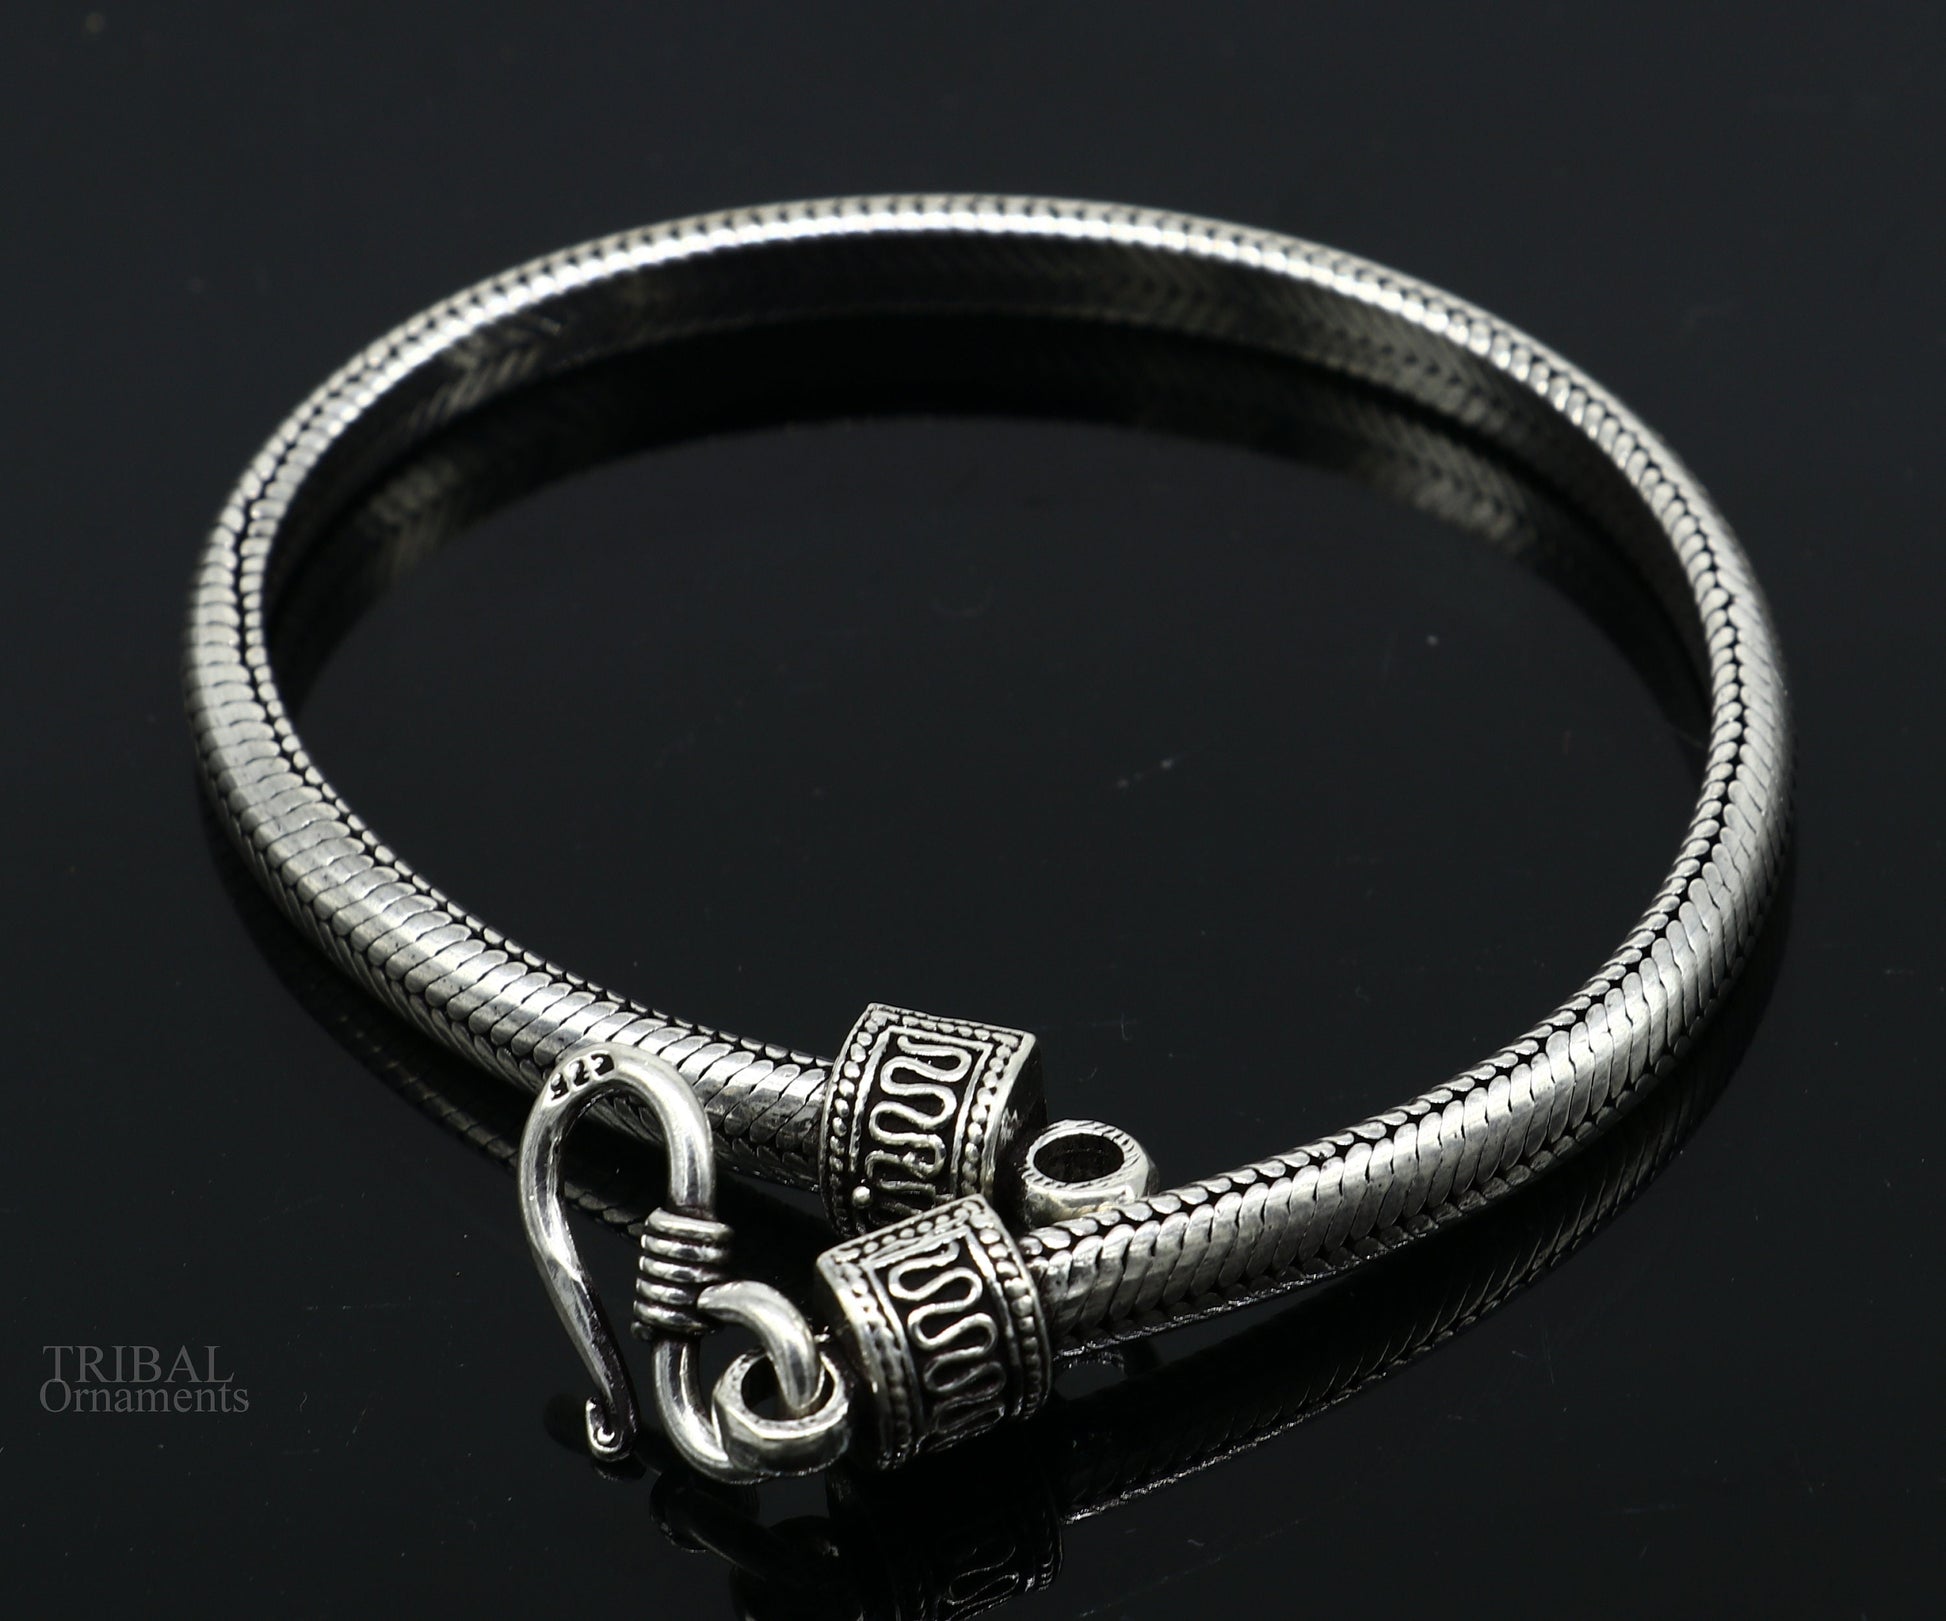 5.5mm 925 Sterling Silver Handmade Snake Chain Bracelet, D Shape Chain Bracelet, Half Round Snake Chain Bracelet Stylish Jewelry sbr261